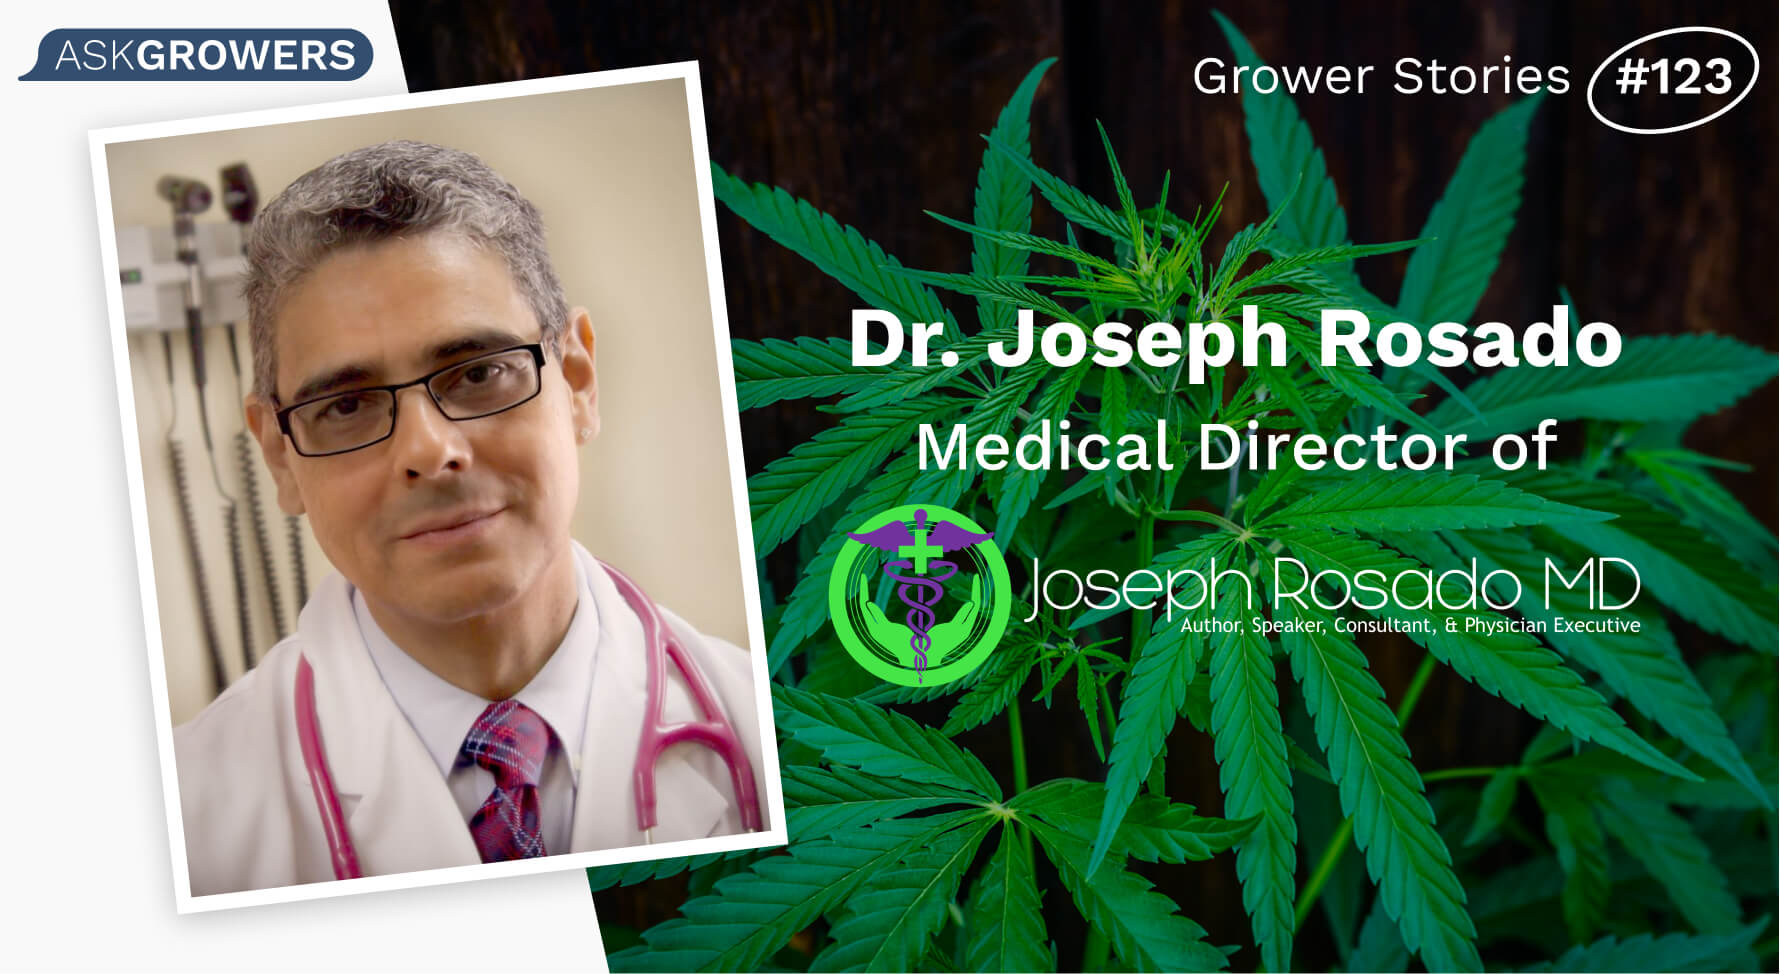 Grower Stories #123: Dr. Joseph Rosado